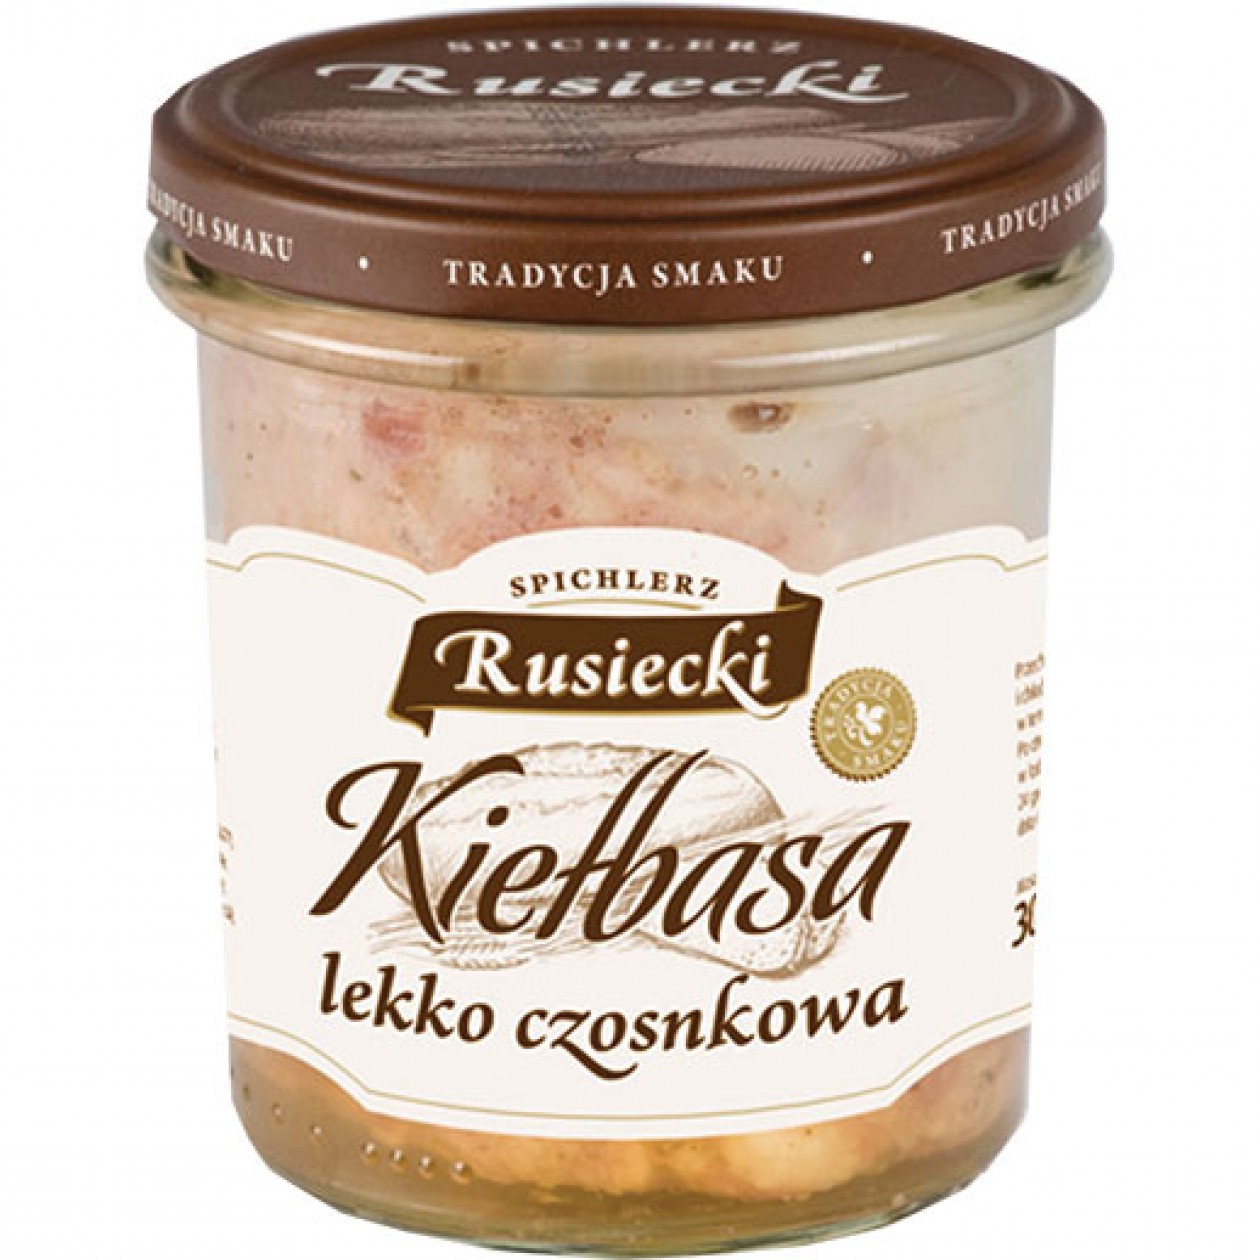 Rusiecki Kielbasa (Gently Spiced With Garlic) 8x300g